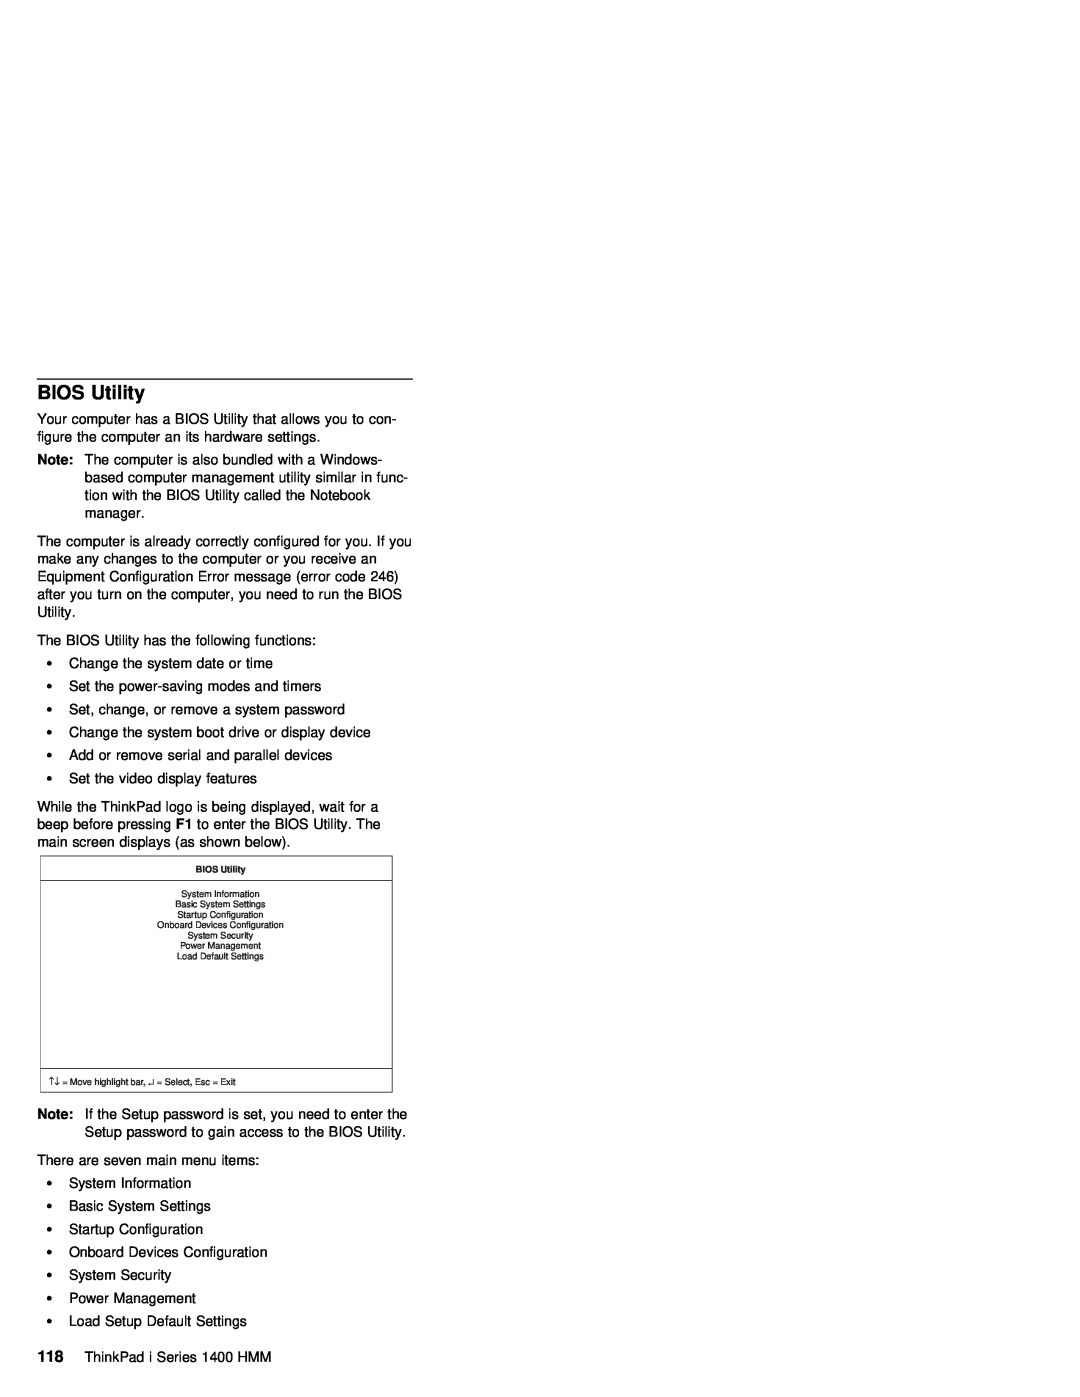 IBM 1400 (2611) manual BIOS Utility, System Information Basic System Settings Startup Configuration 